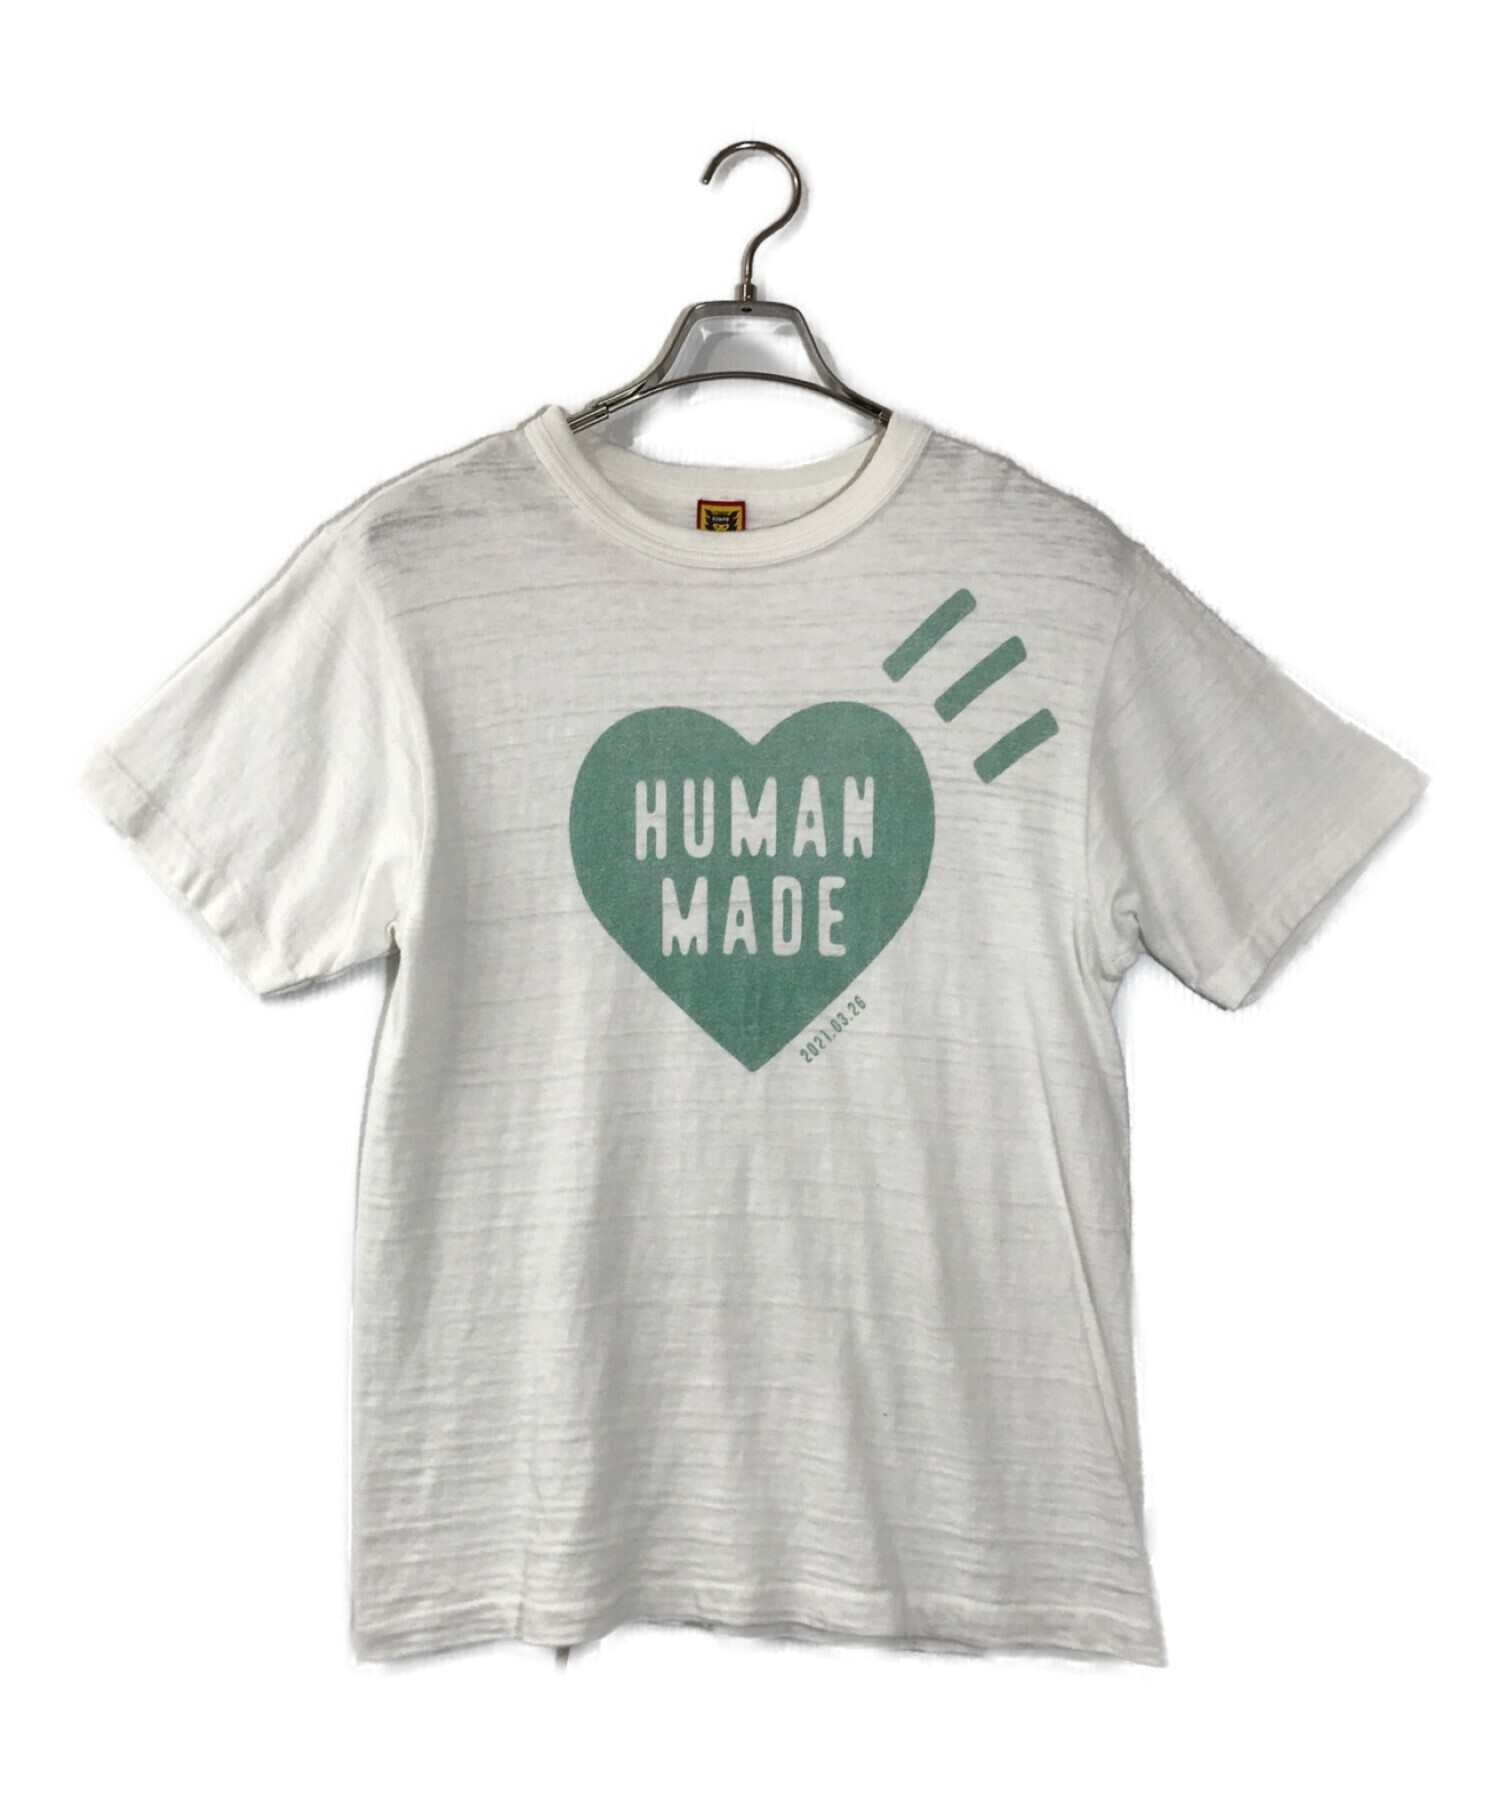 HUMAN MADE Tシャツ - Tシャツ